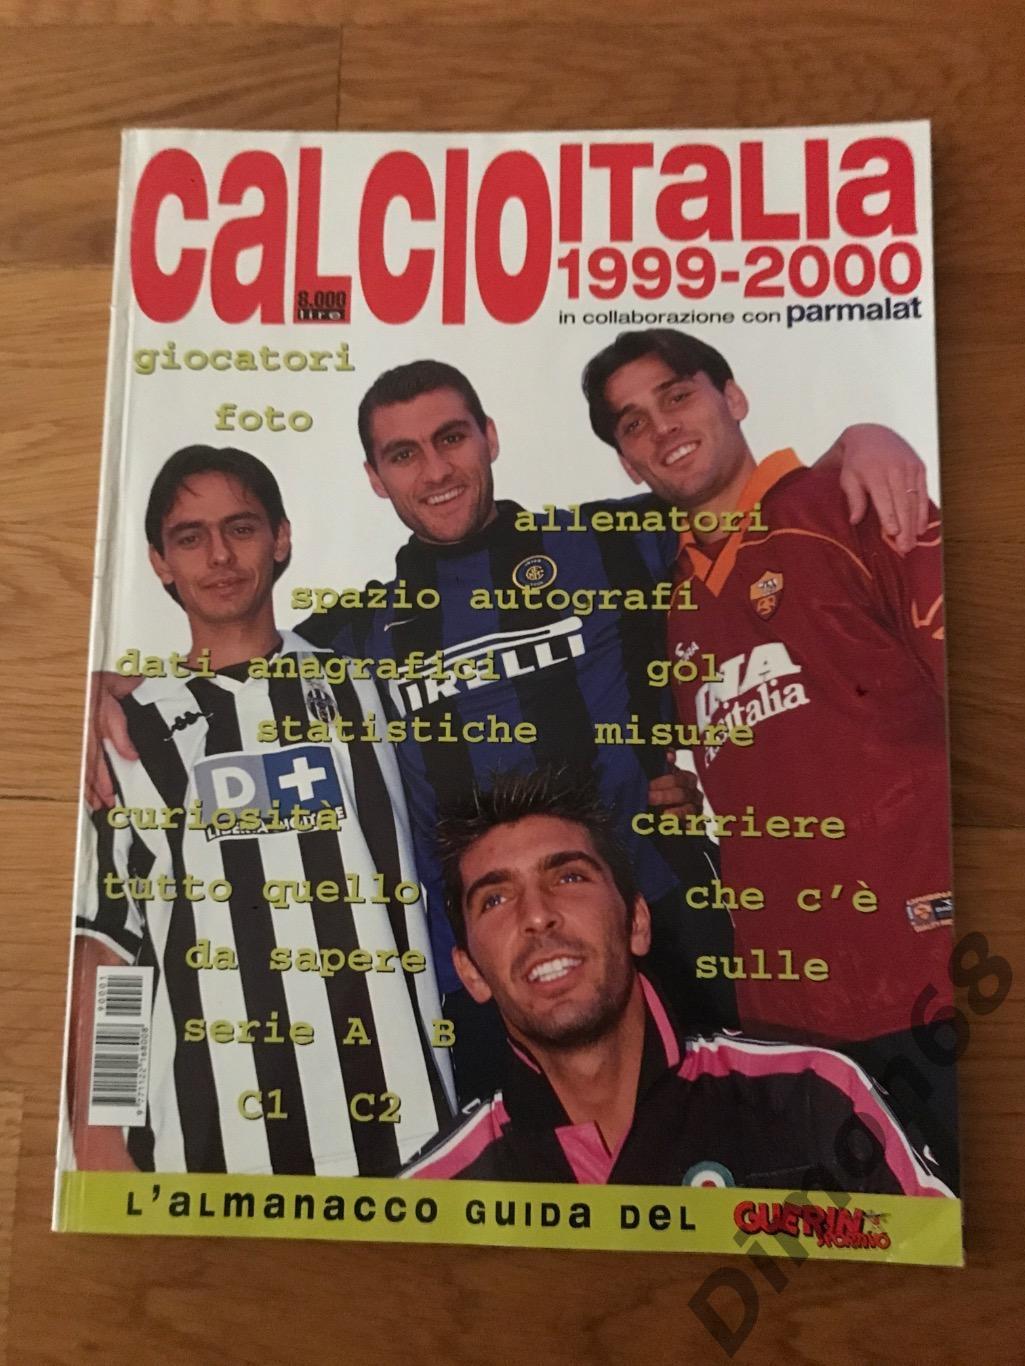 Calcioitalia guerin sportivo 99/2000г представление команд серии A,B,C1,C2 целый